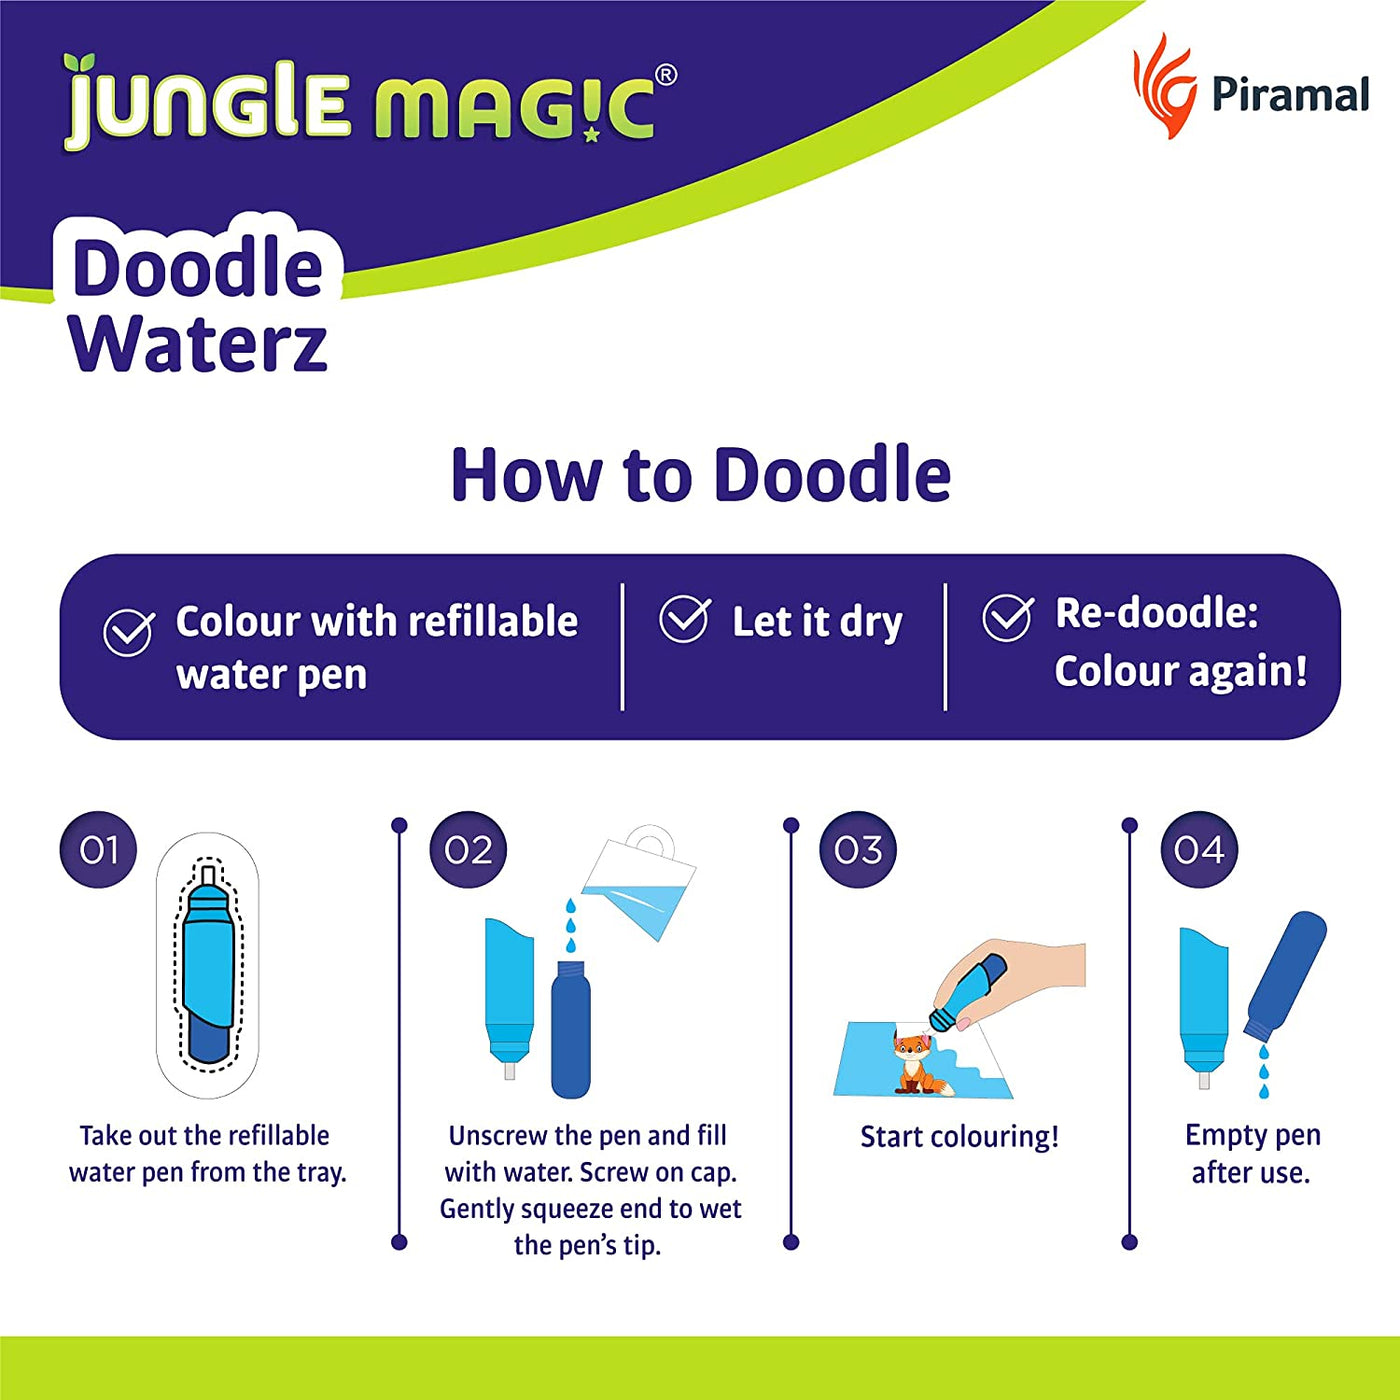 Alphabets: Doodle Waterz - Reusable | Jungle Magic